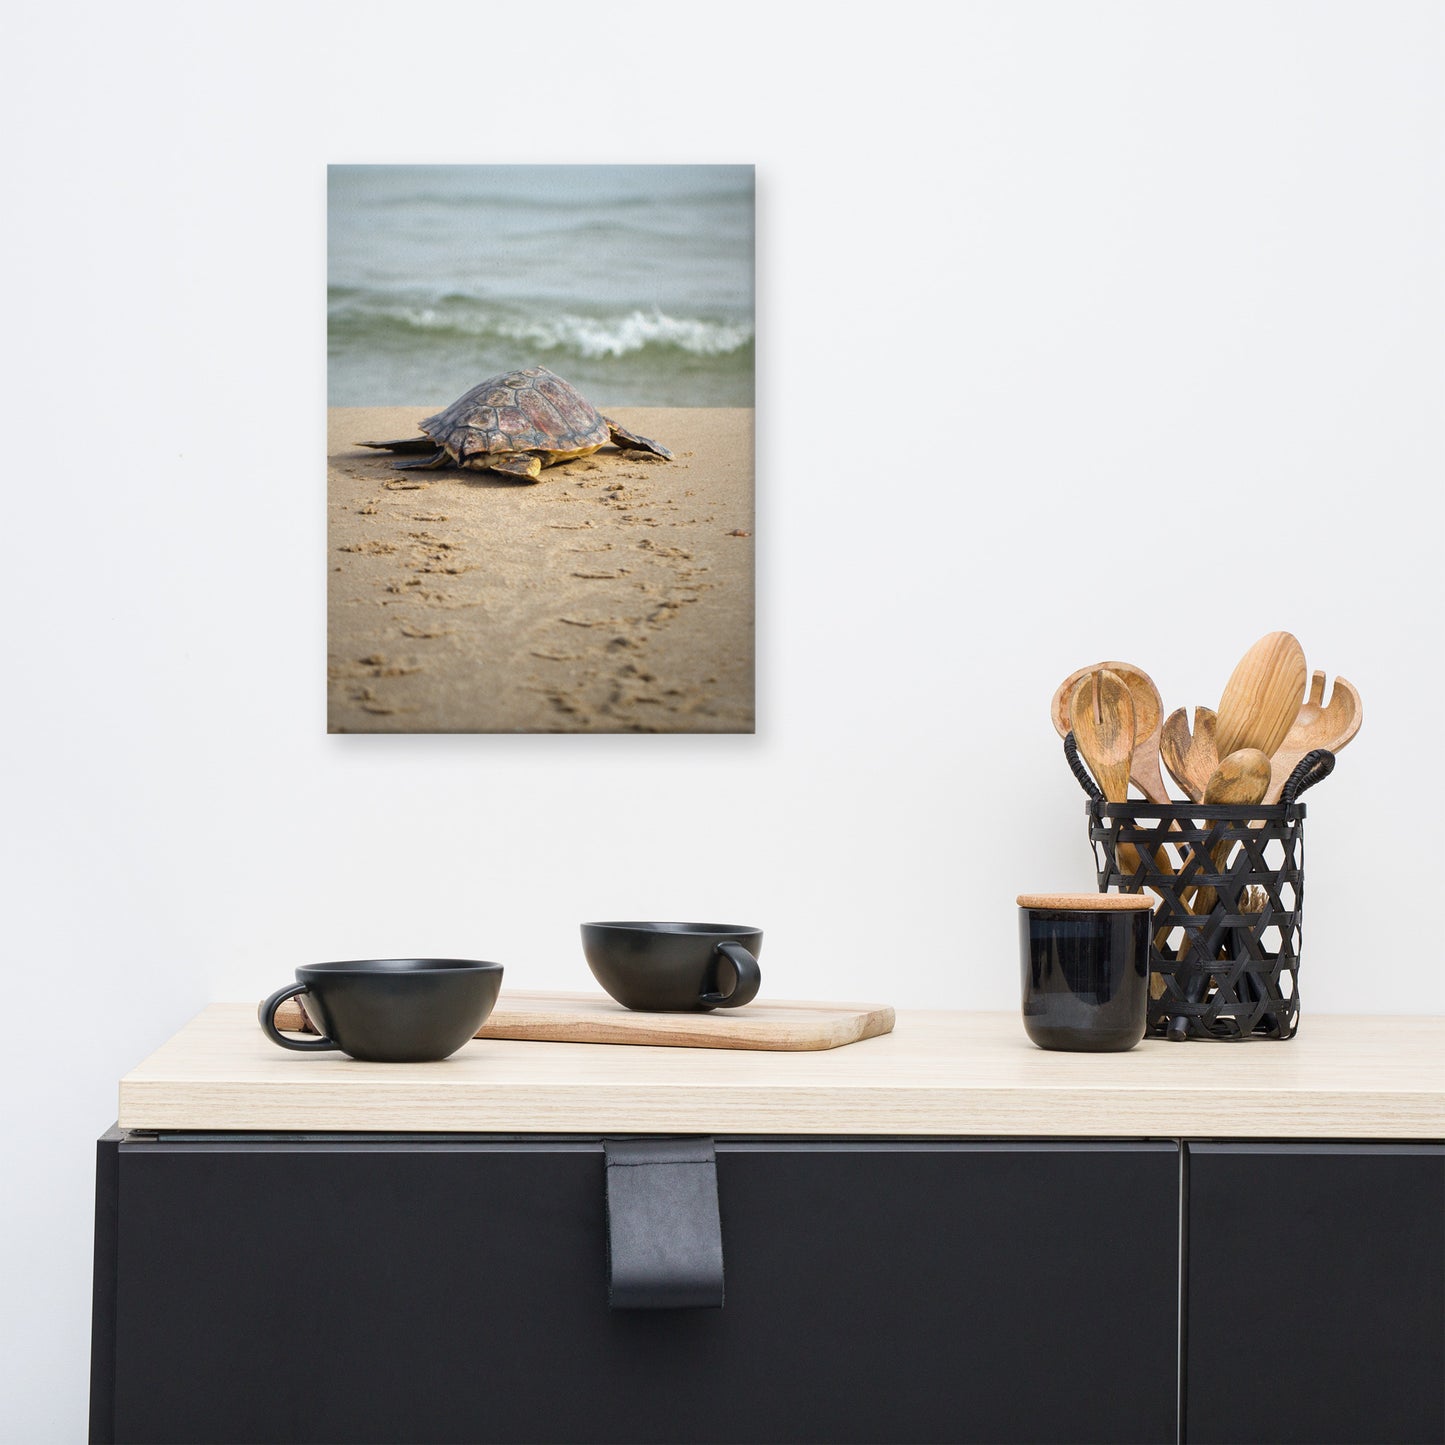 Modern Kitchen Canvas Art: Baby Loggerhead Sea Turtle Hatchling at the Shore - Coastal / Wildlife / Marine Animal / Nature Photograph Canvas Wall Art Print - Artwork